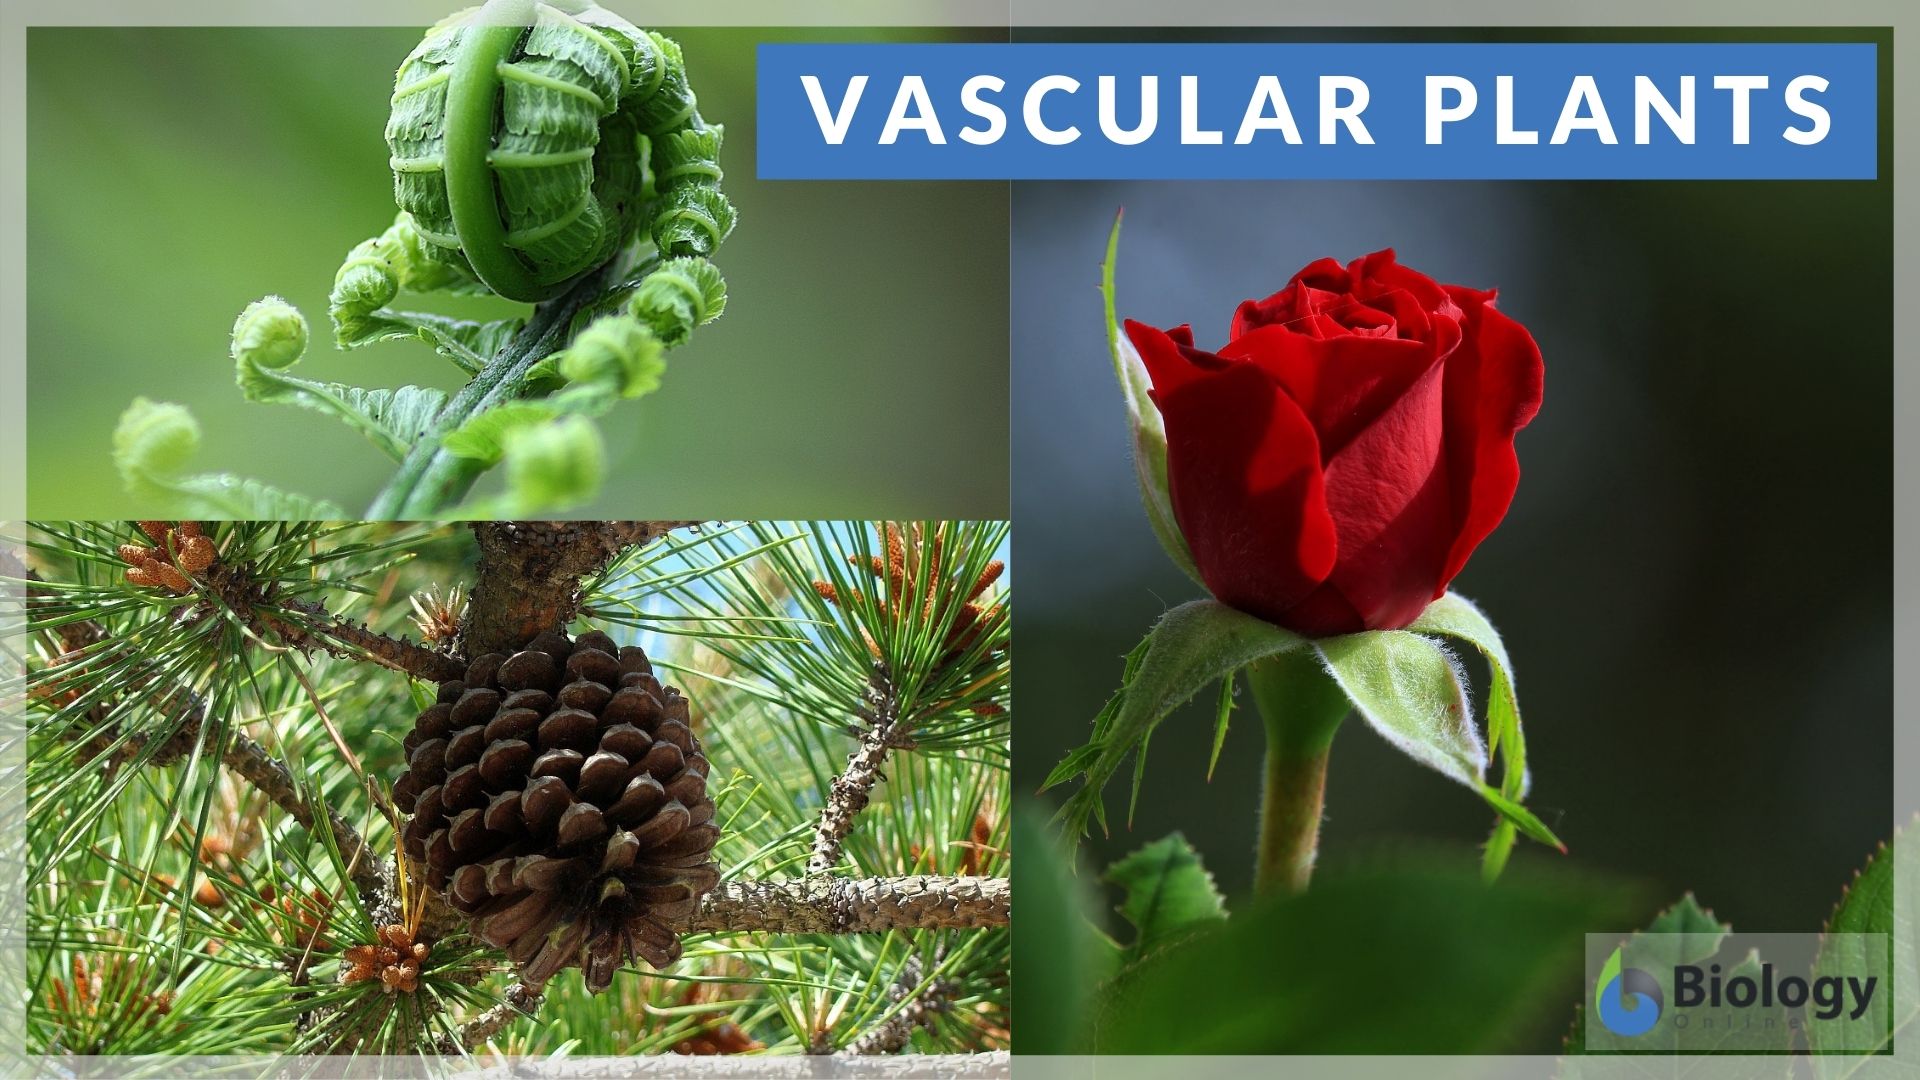 seedless vascular plants examples